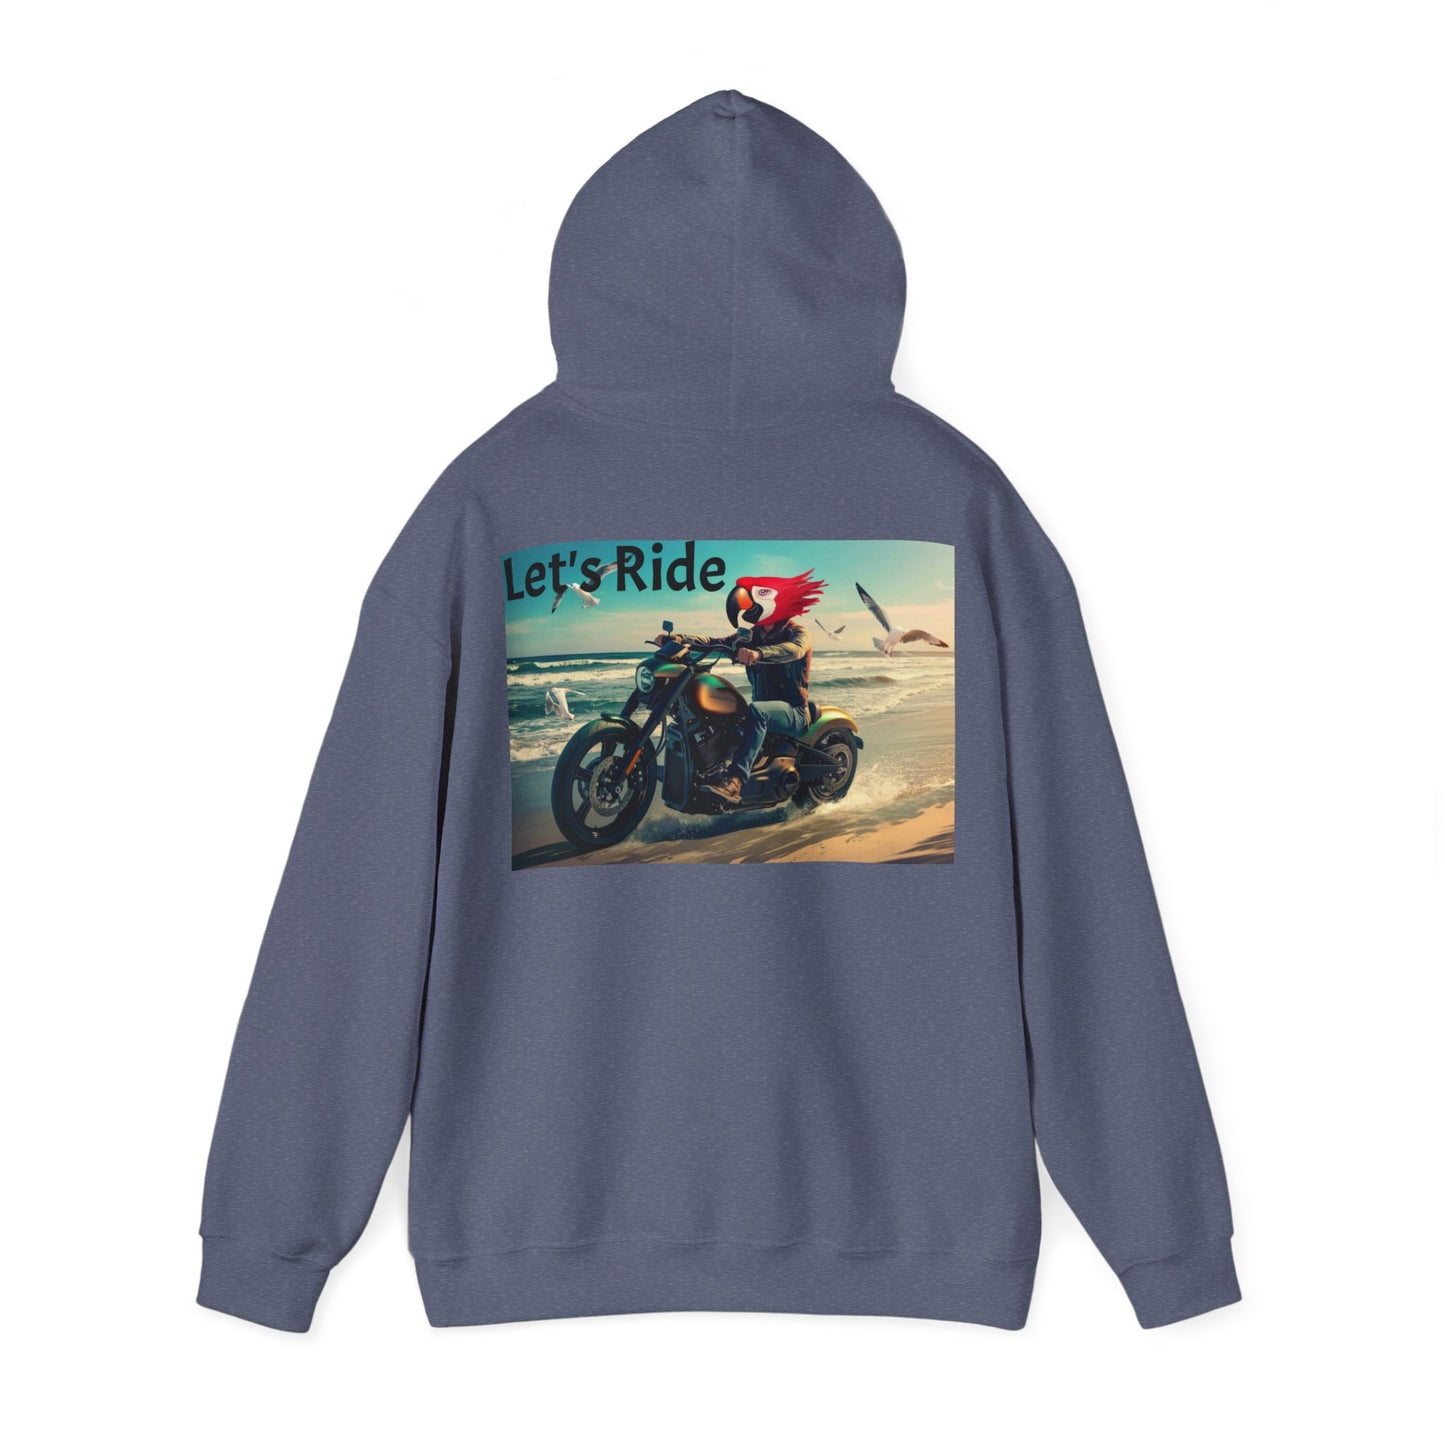 Let's Ride - Motorcyle on Beach - Hoodie